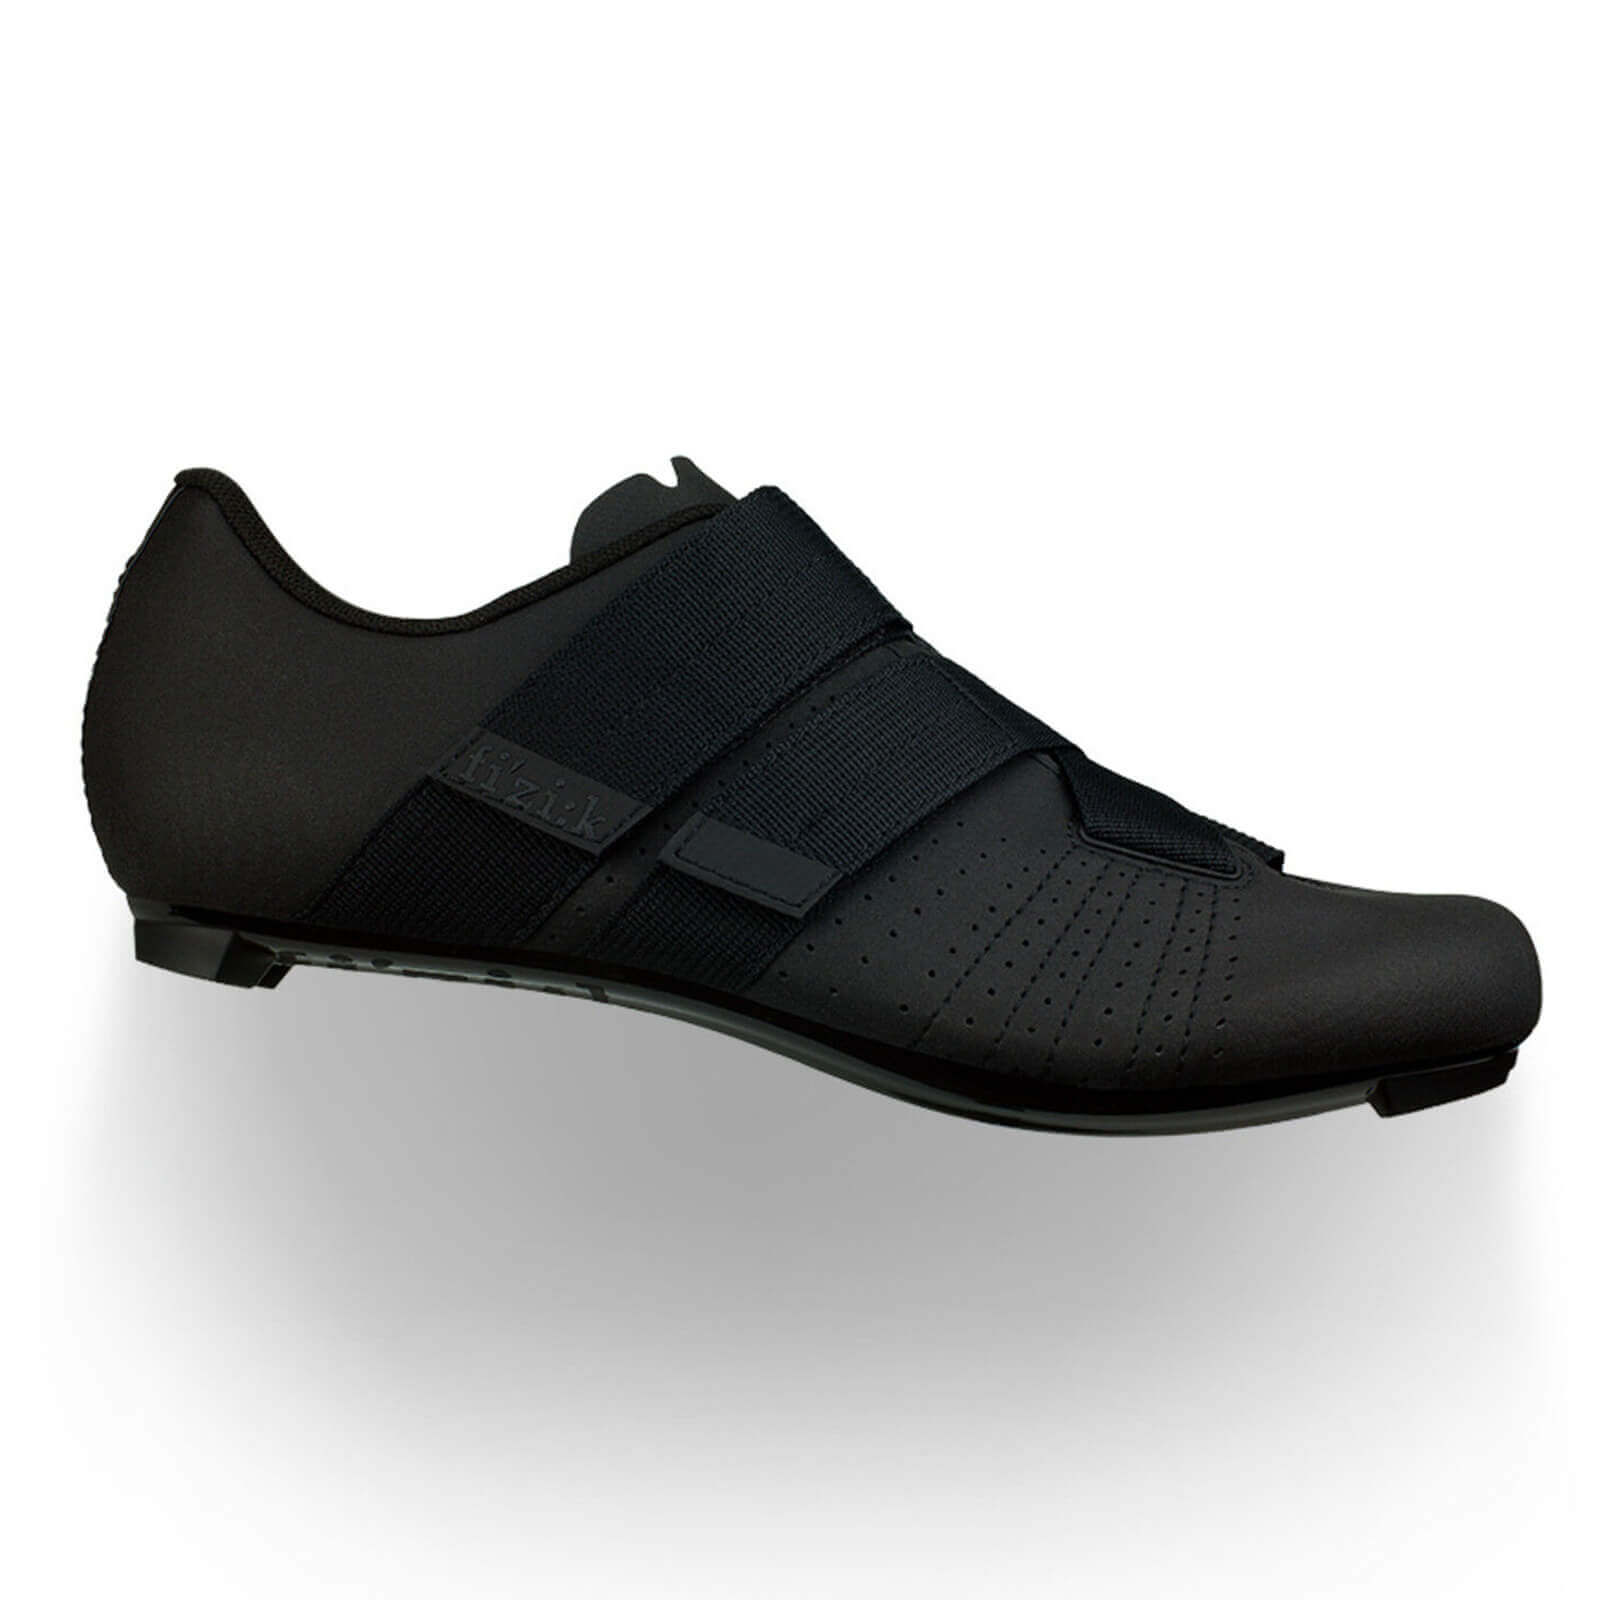 Fizik Tempo Powerstrap R5 Road Shoes - EU 46.5 - Black